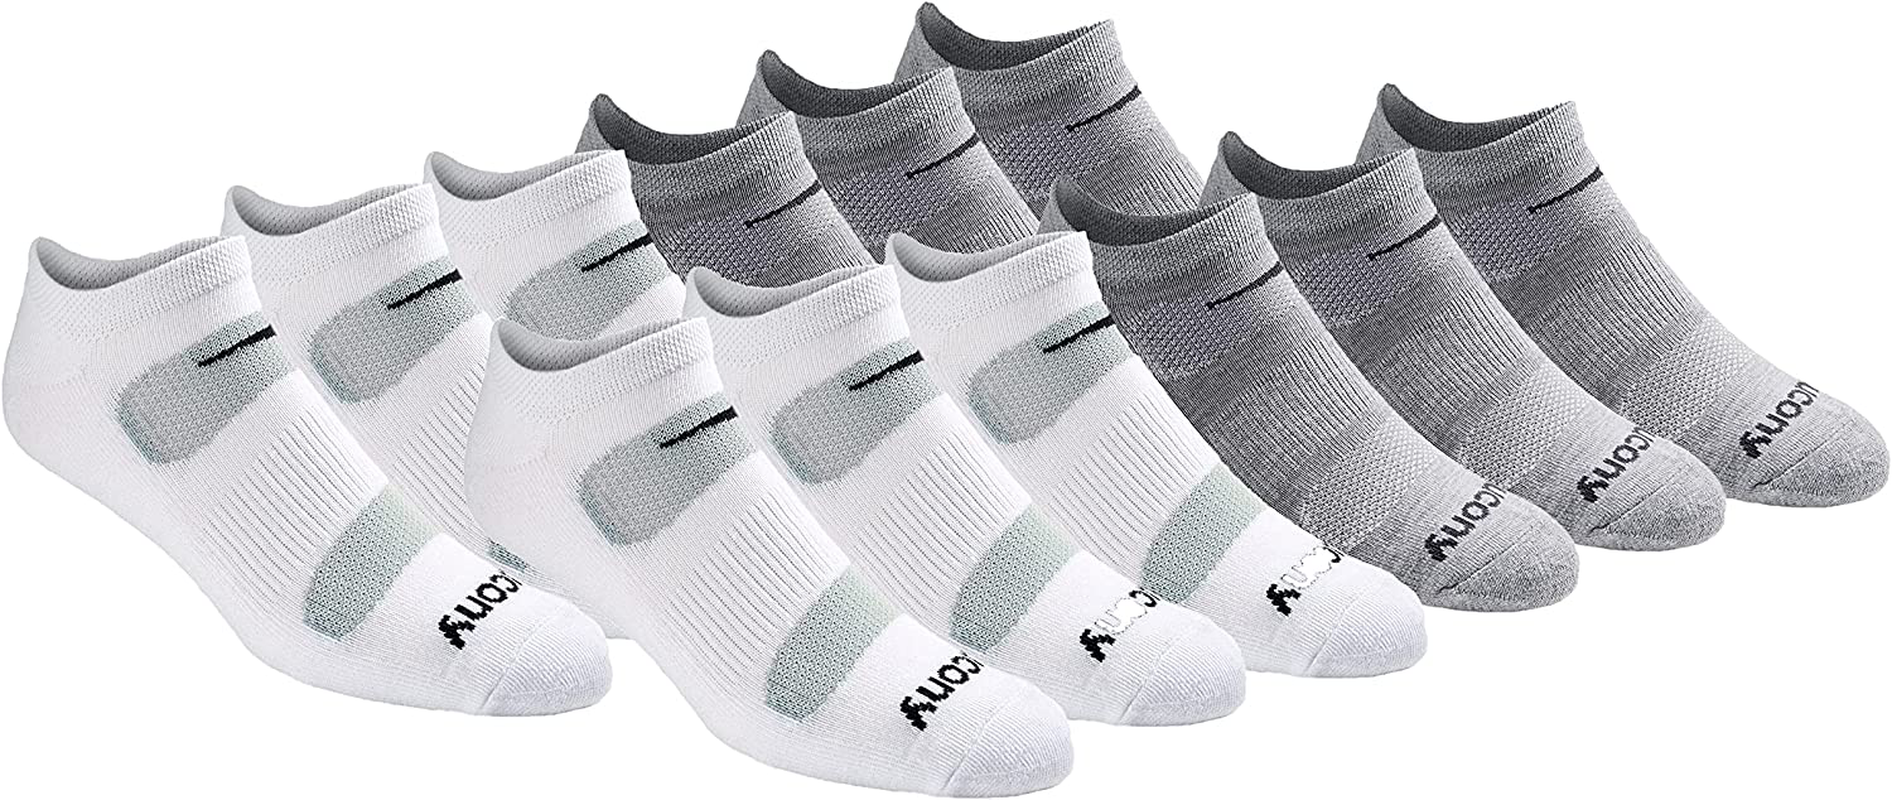 Saucony Mesh Comfort Fit Performance No-Show Grey Fashion Men's Socks (12 Pairs) S62009